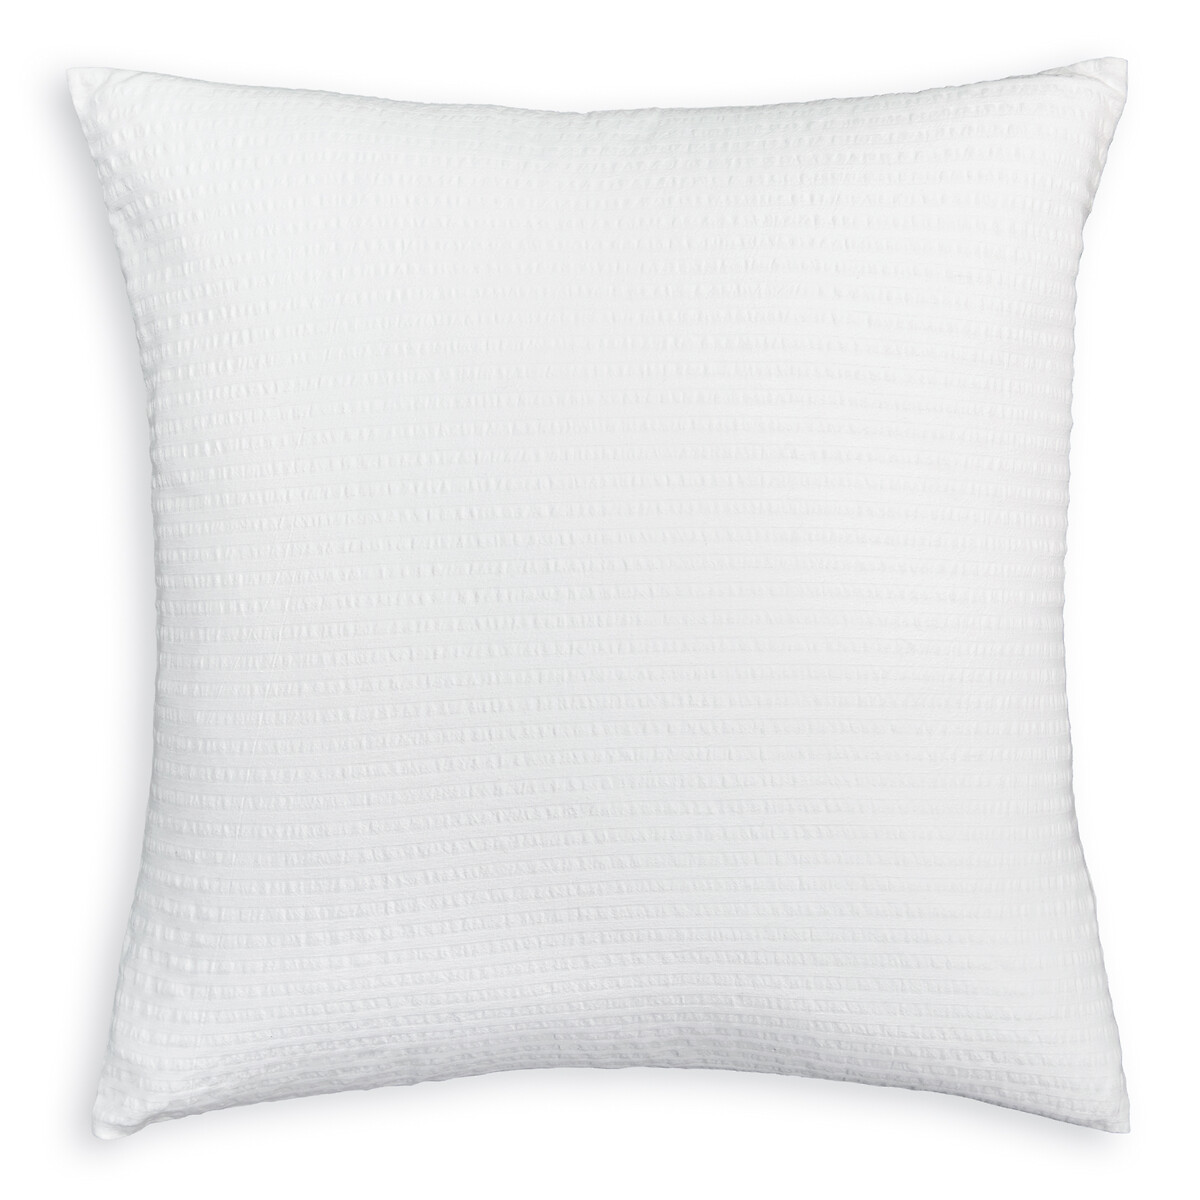 Чехол на подушку из легкой полосатой ткани 65 x 65 см Odalia 65 x 65 см белый scenario la redoute 65 x 100 см каштановый